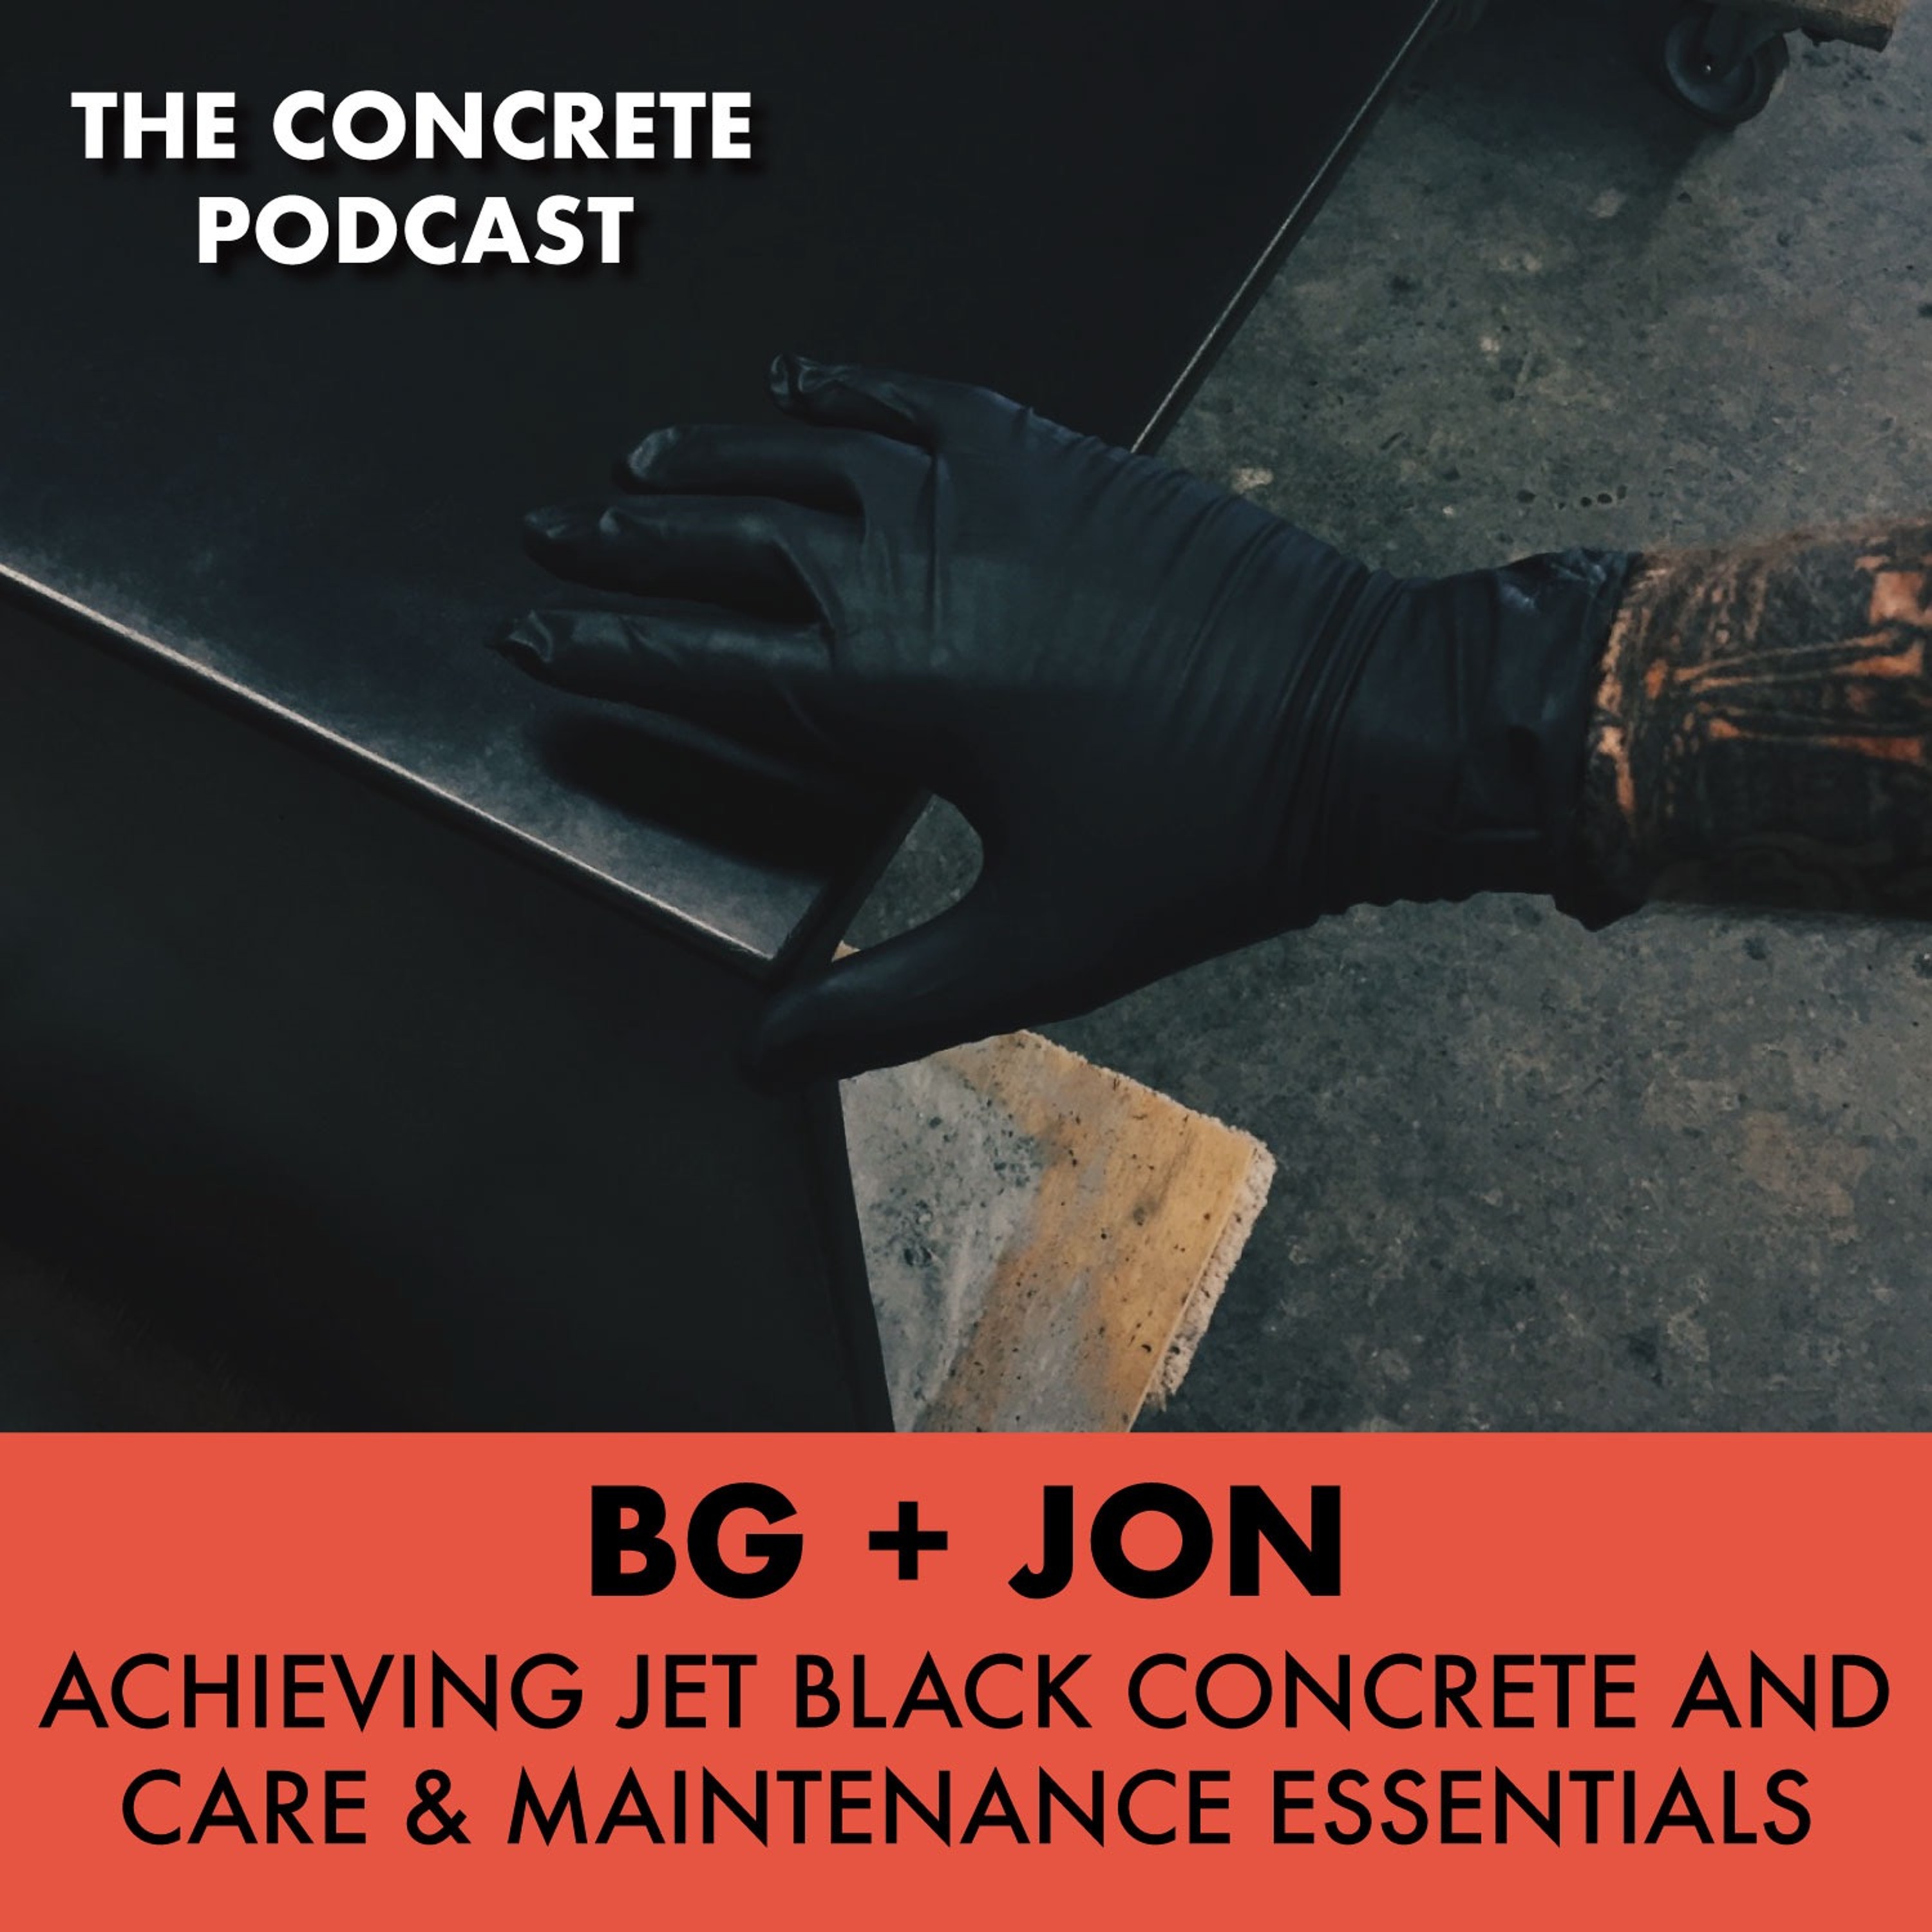 Achieving Jet Black Concrete and Care & Maintenance Essentials